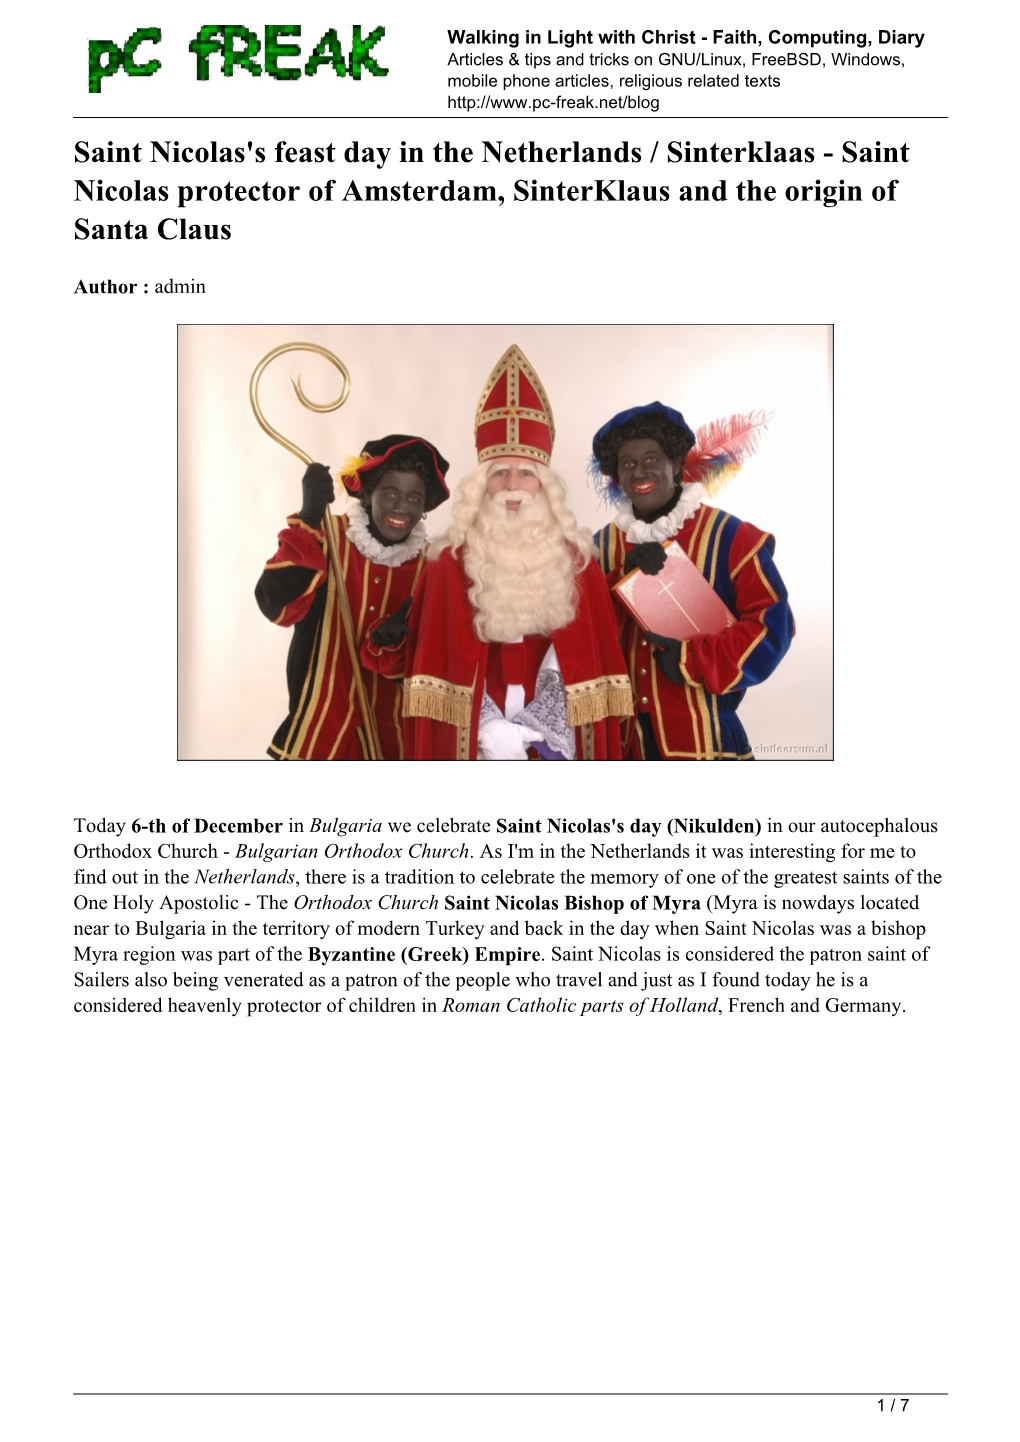 Saint Nicolas's Feast Day in the Netherlands / Sinterklaas - Saint Nicolas Protector of Amsterdam, Sinterklaus and the Origin of Santa Claus